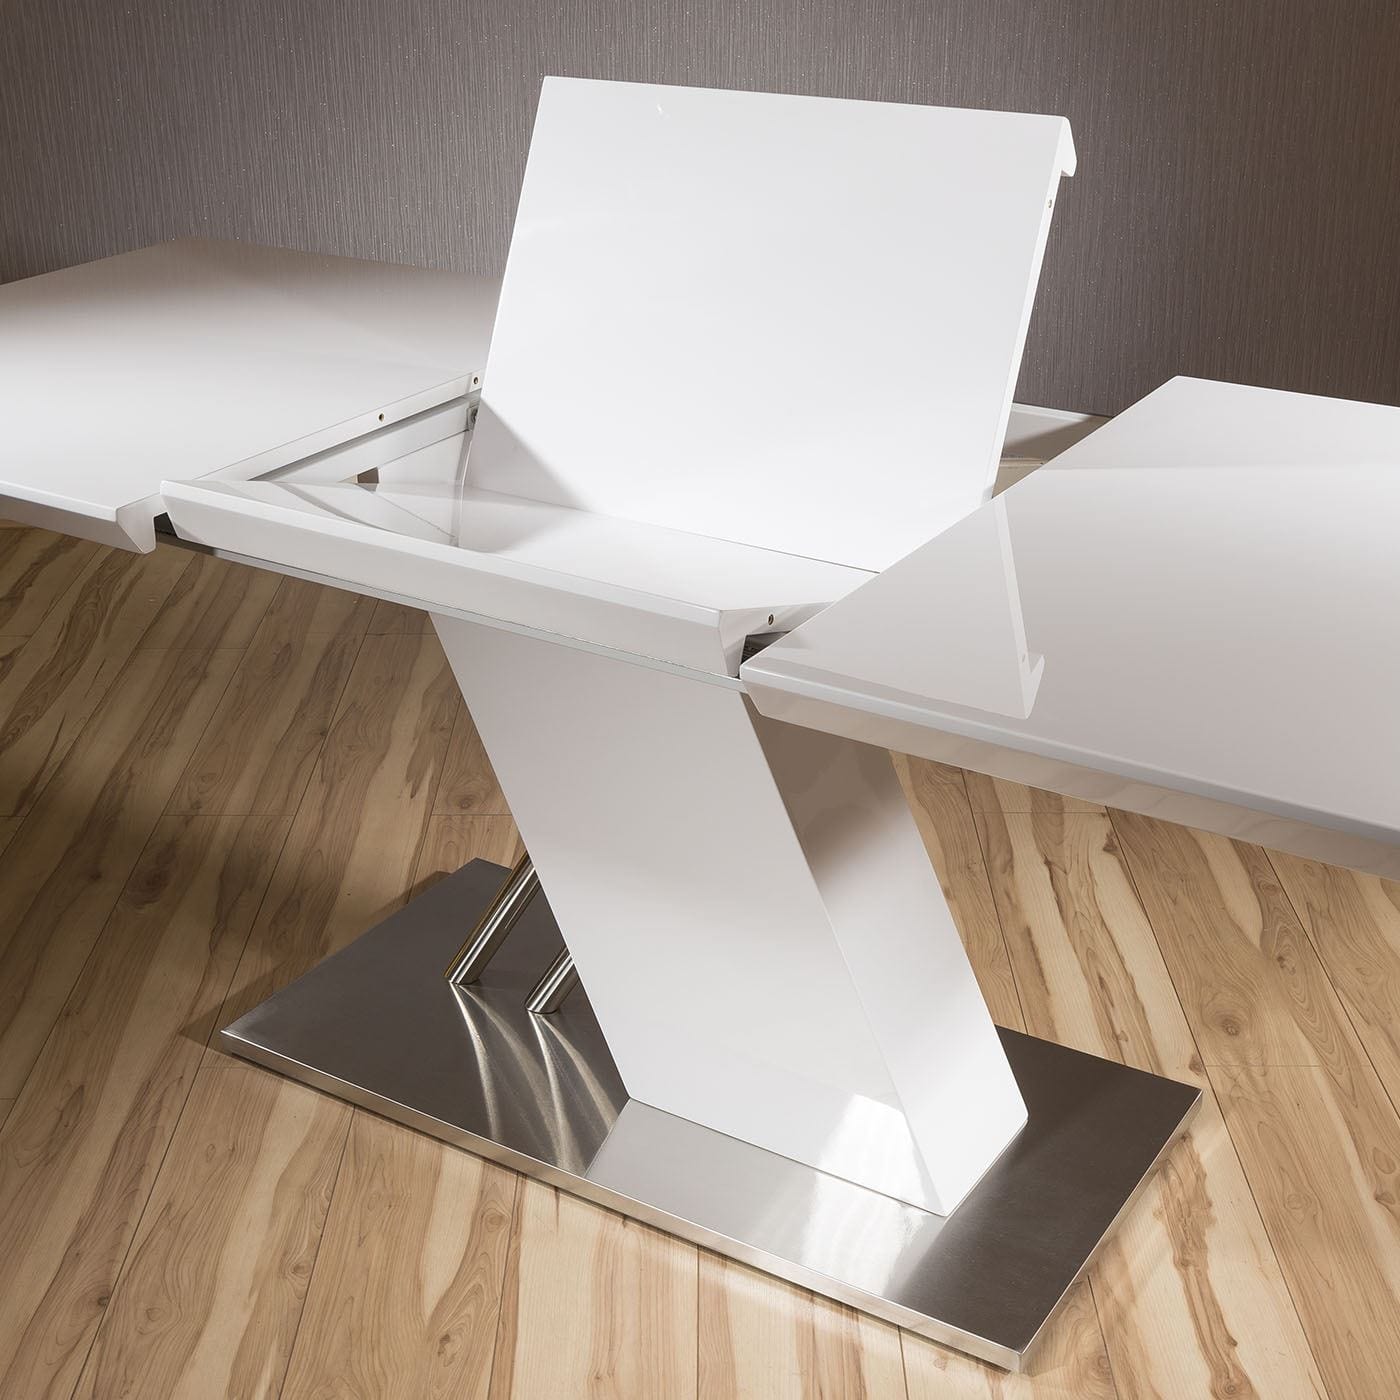 Quatropi Modern Extending Dining Table White Gloss Colour 160 - 220cm top